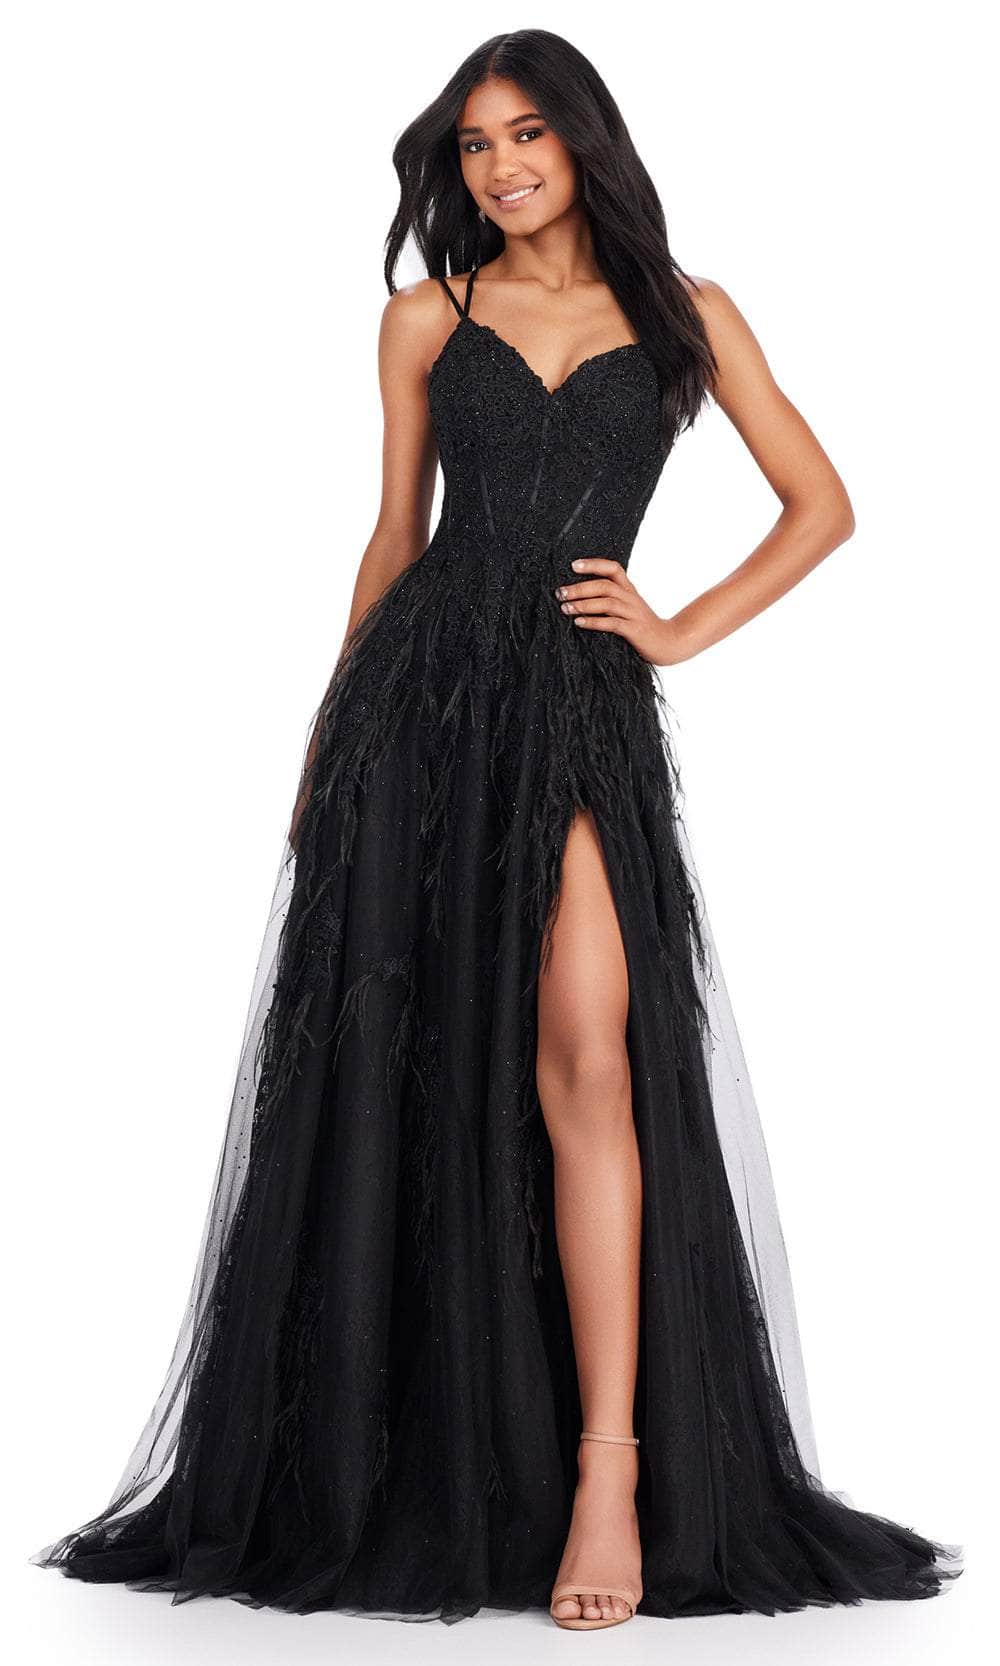 Image of Ashley Lauren 11480 - Sweetheart Corset Style Prom Dress